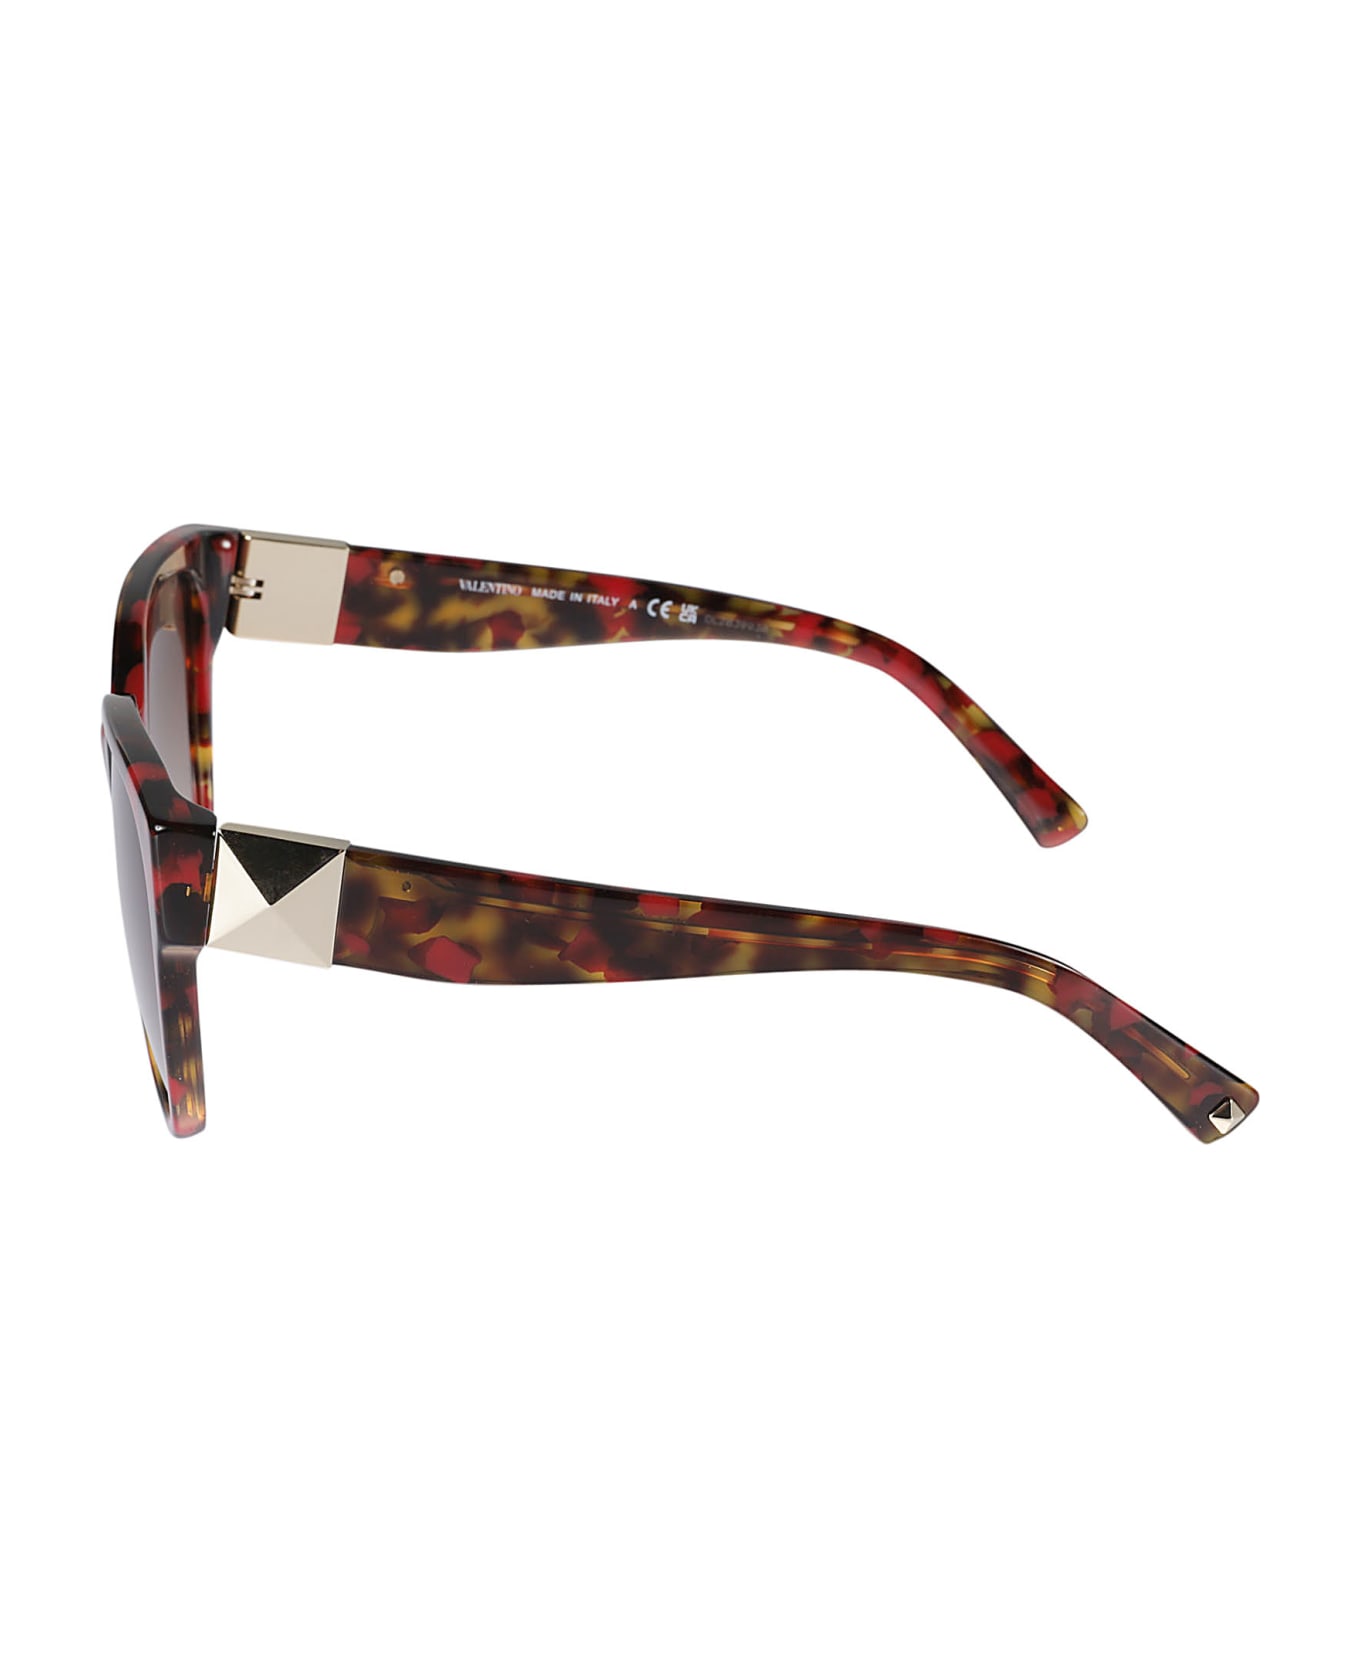 Valentino Eyewear Sole519413 Sunglasses - 519413